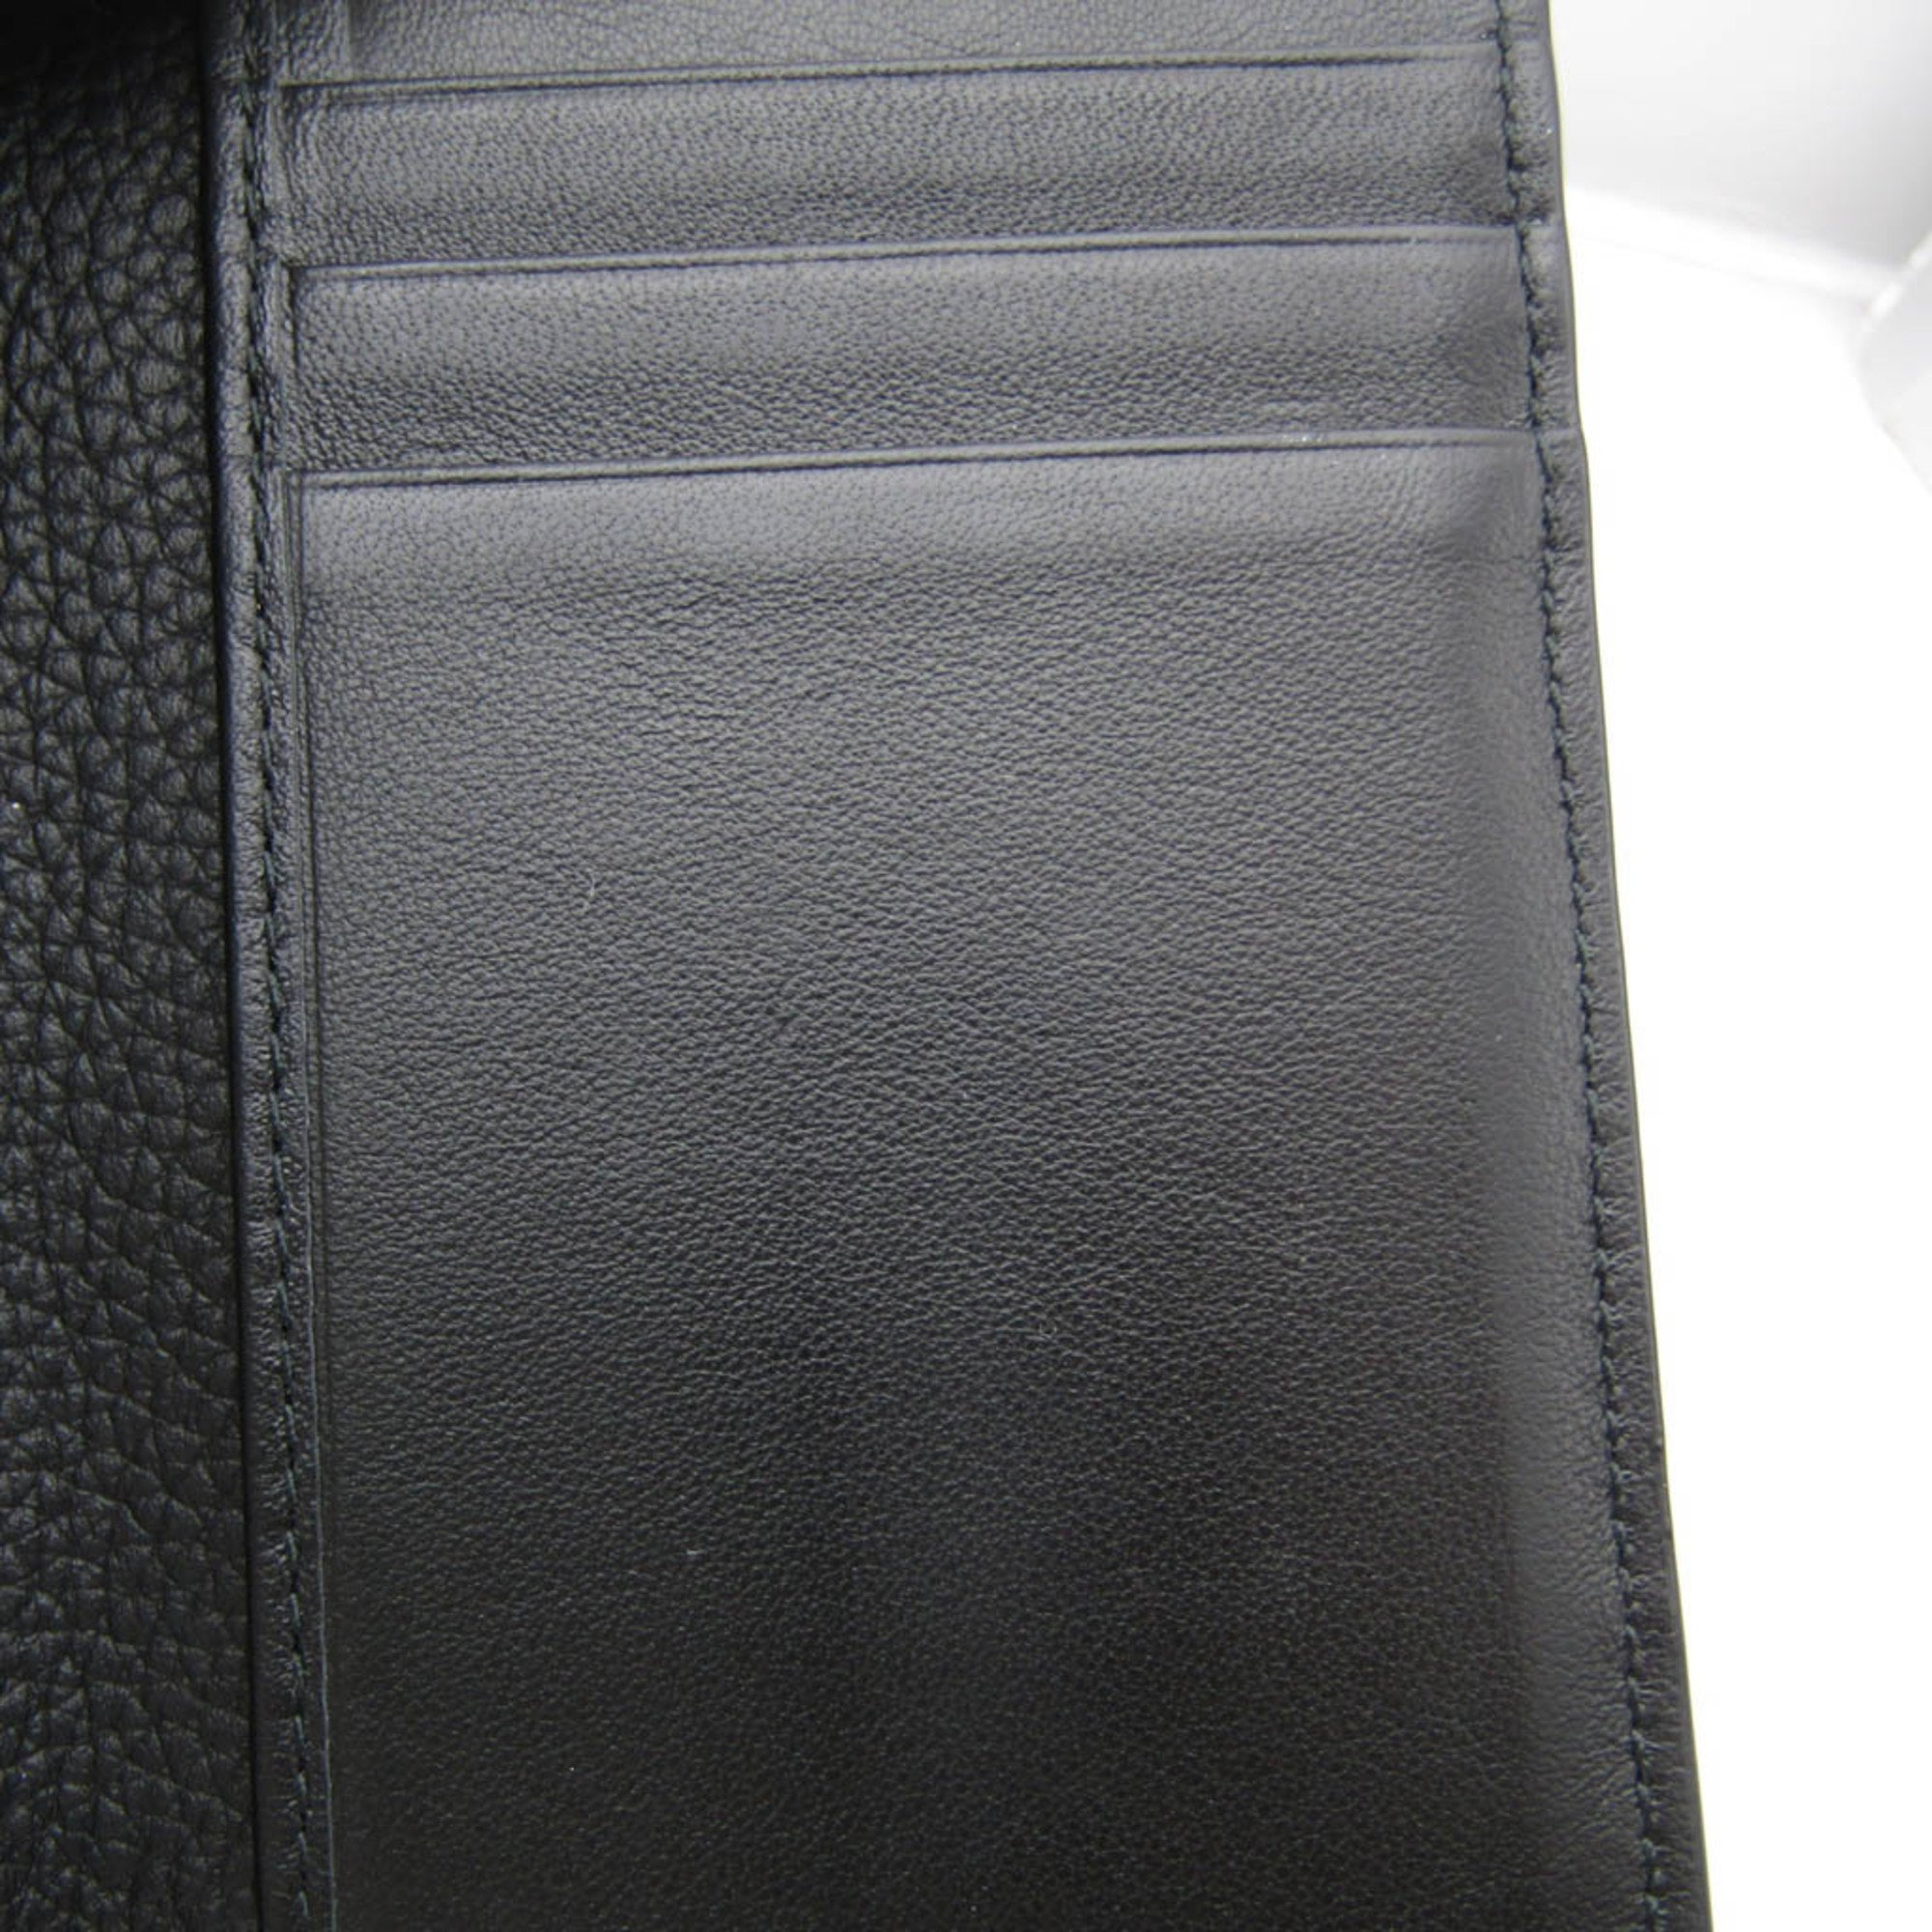 Christian Dior Leather Card Case Black